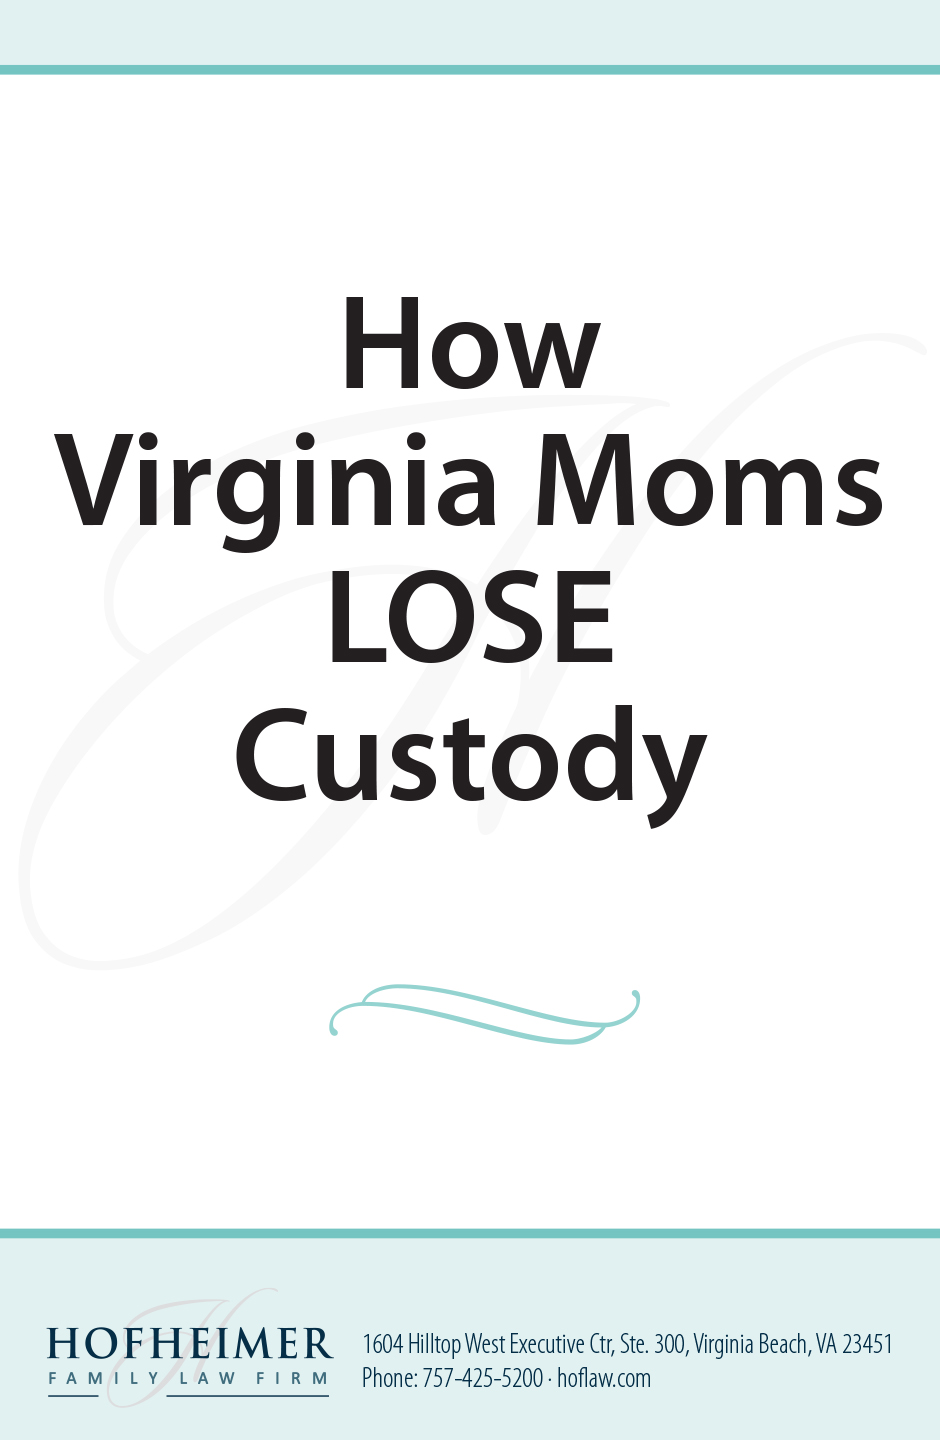 How Virginia Moms Lose Custody